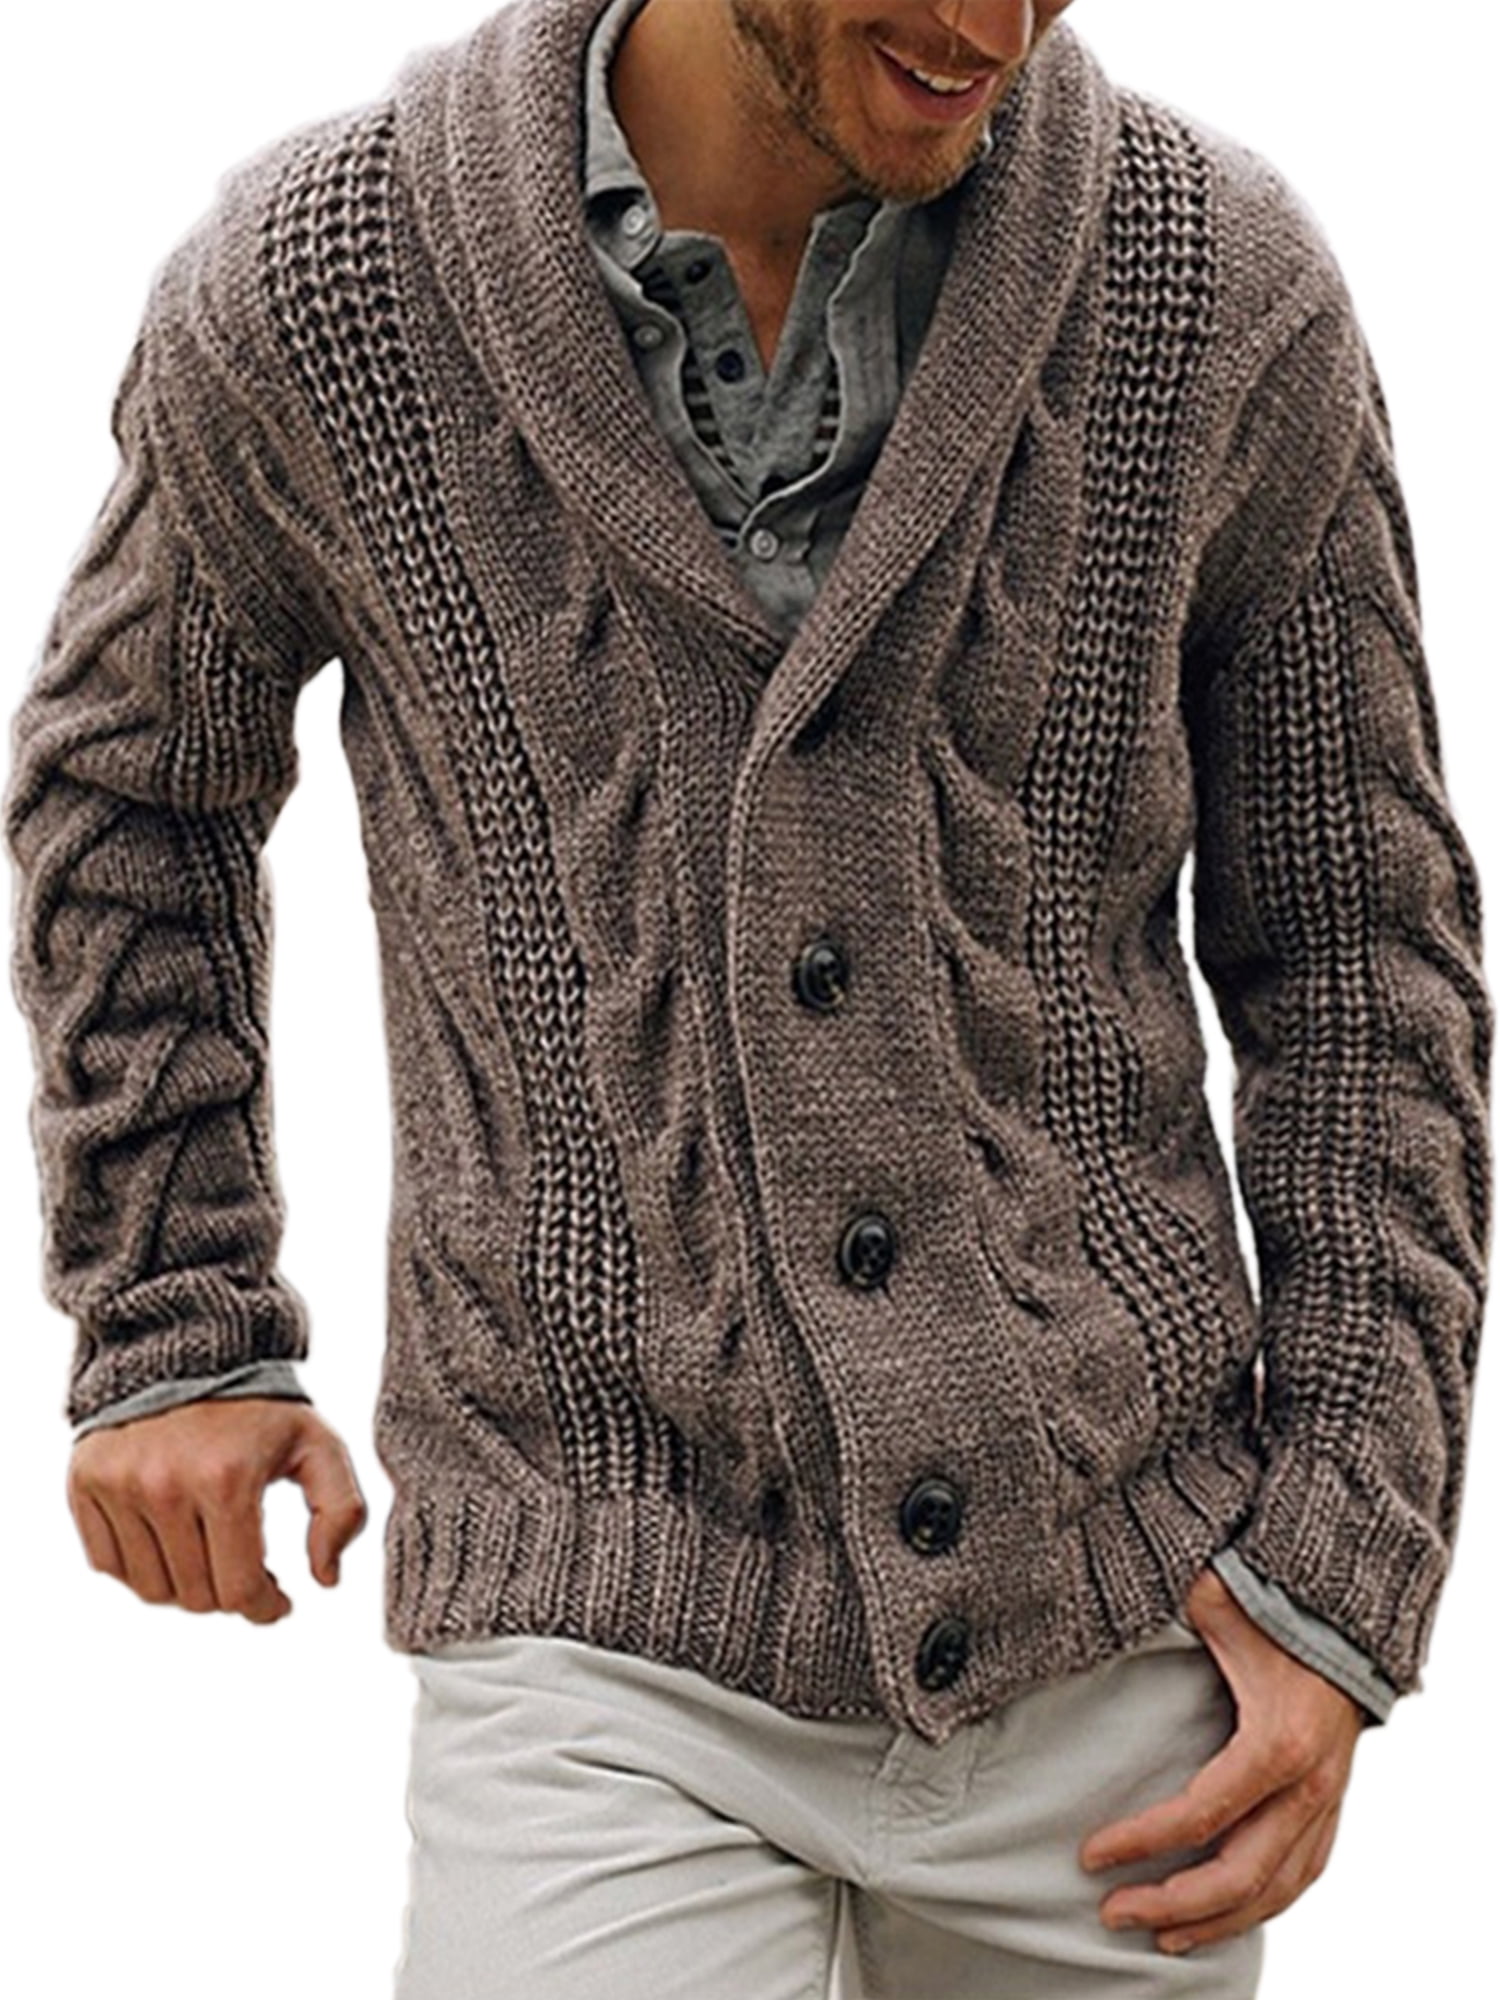 Mens Winter Casual Long Sleeve Knit Sweater Shirt Hoodies Cardigan Jumper Tops 